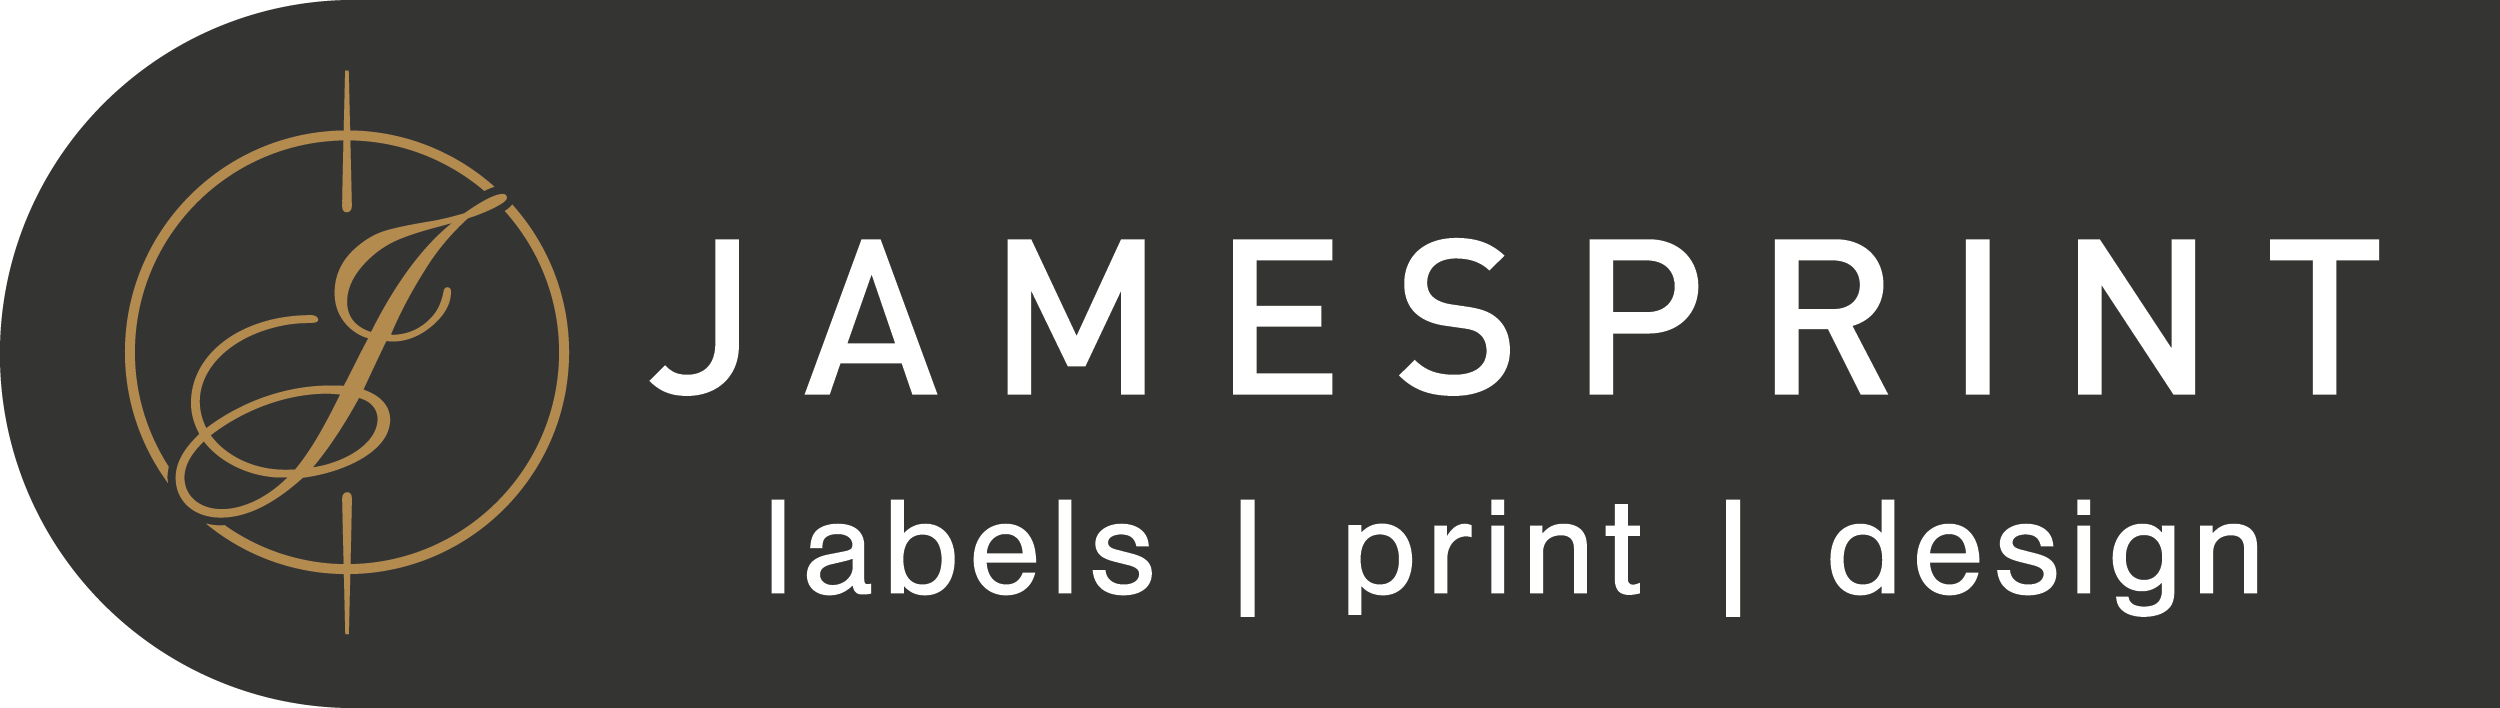 JamesPrint logo